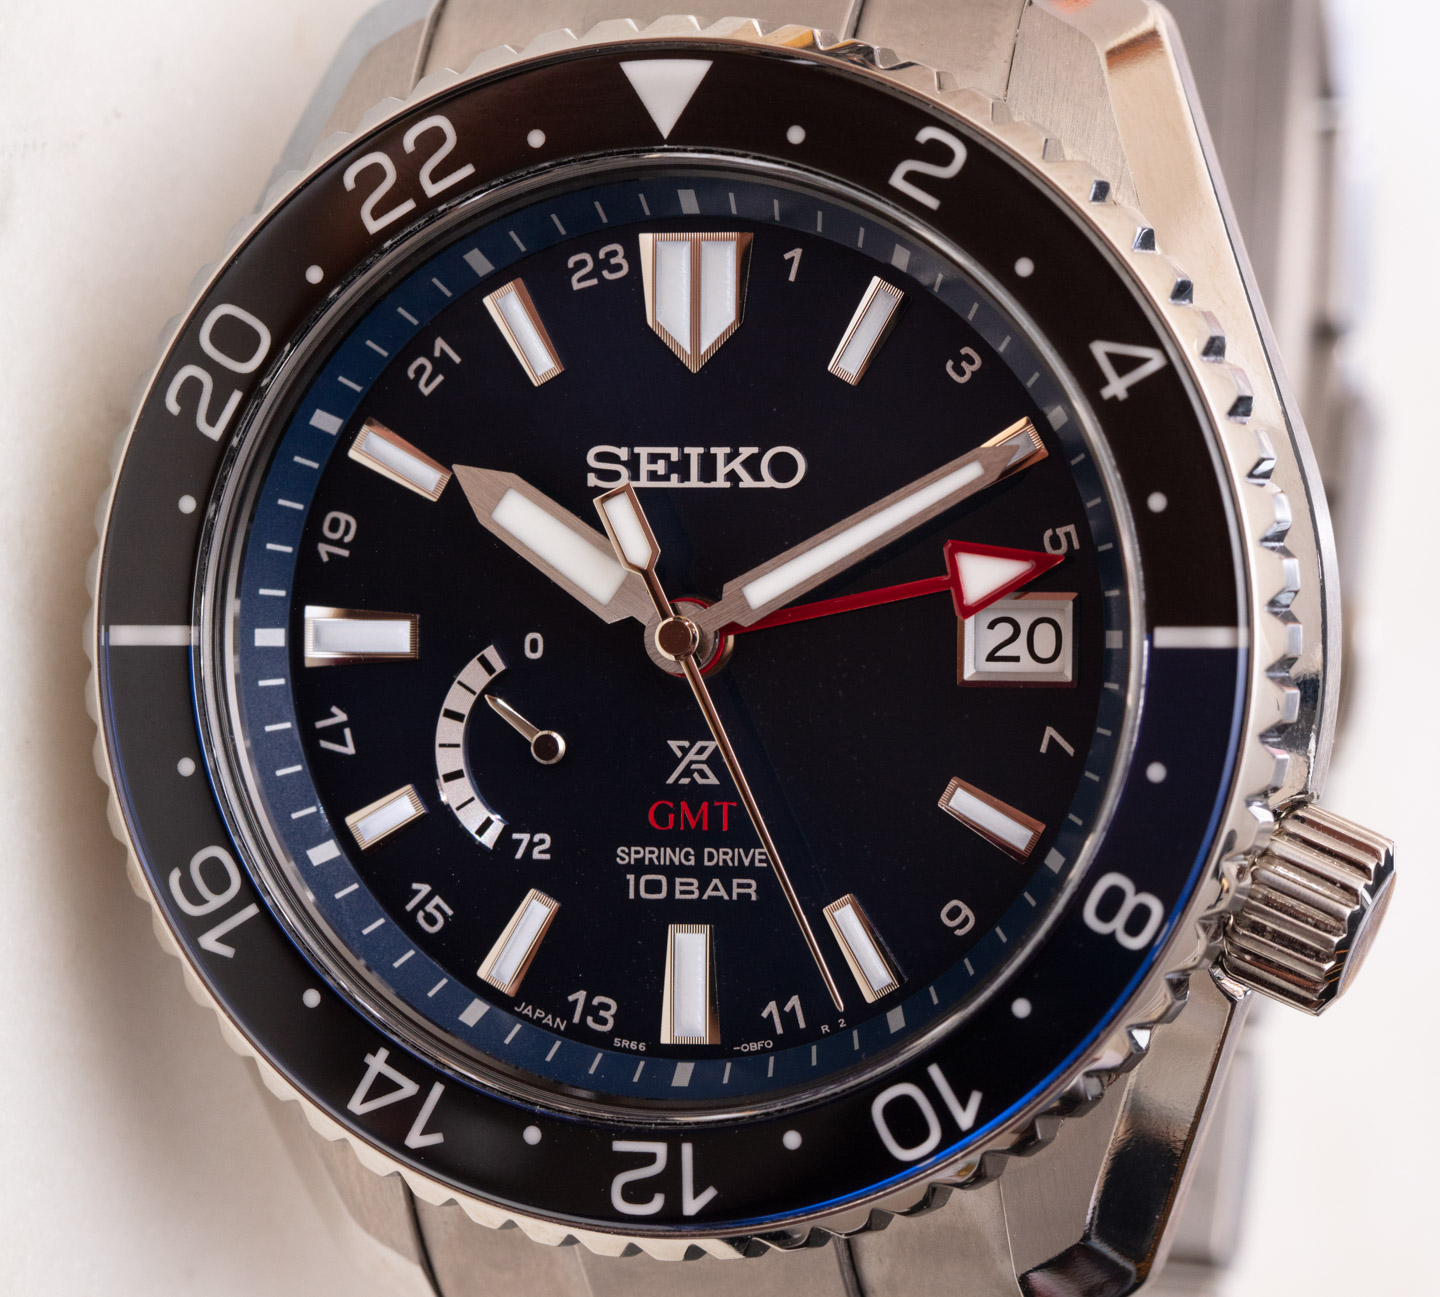 Watch Review: Seiko Prospex SNR033 Spring Drive GMT | aBlogtoWatch